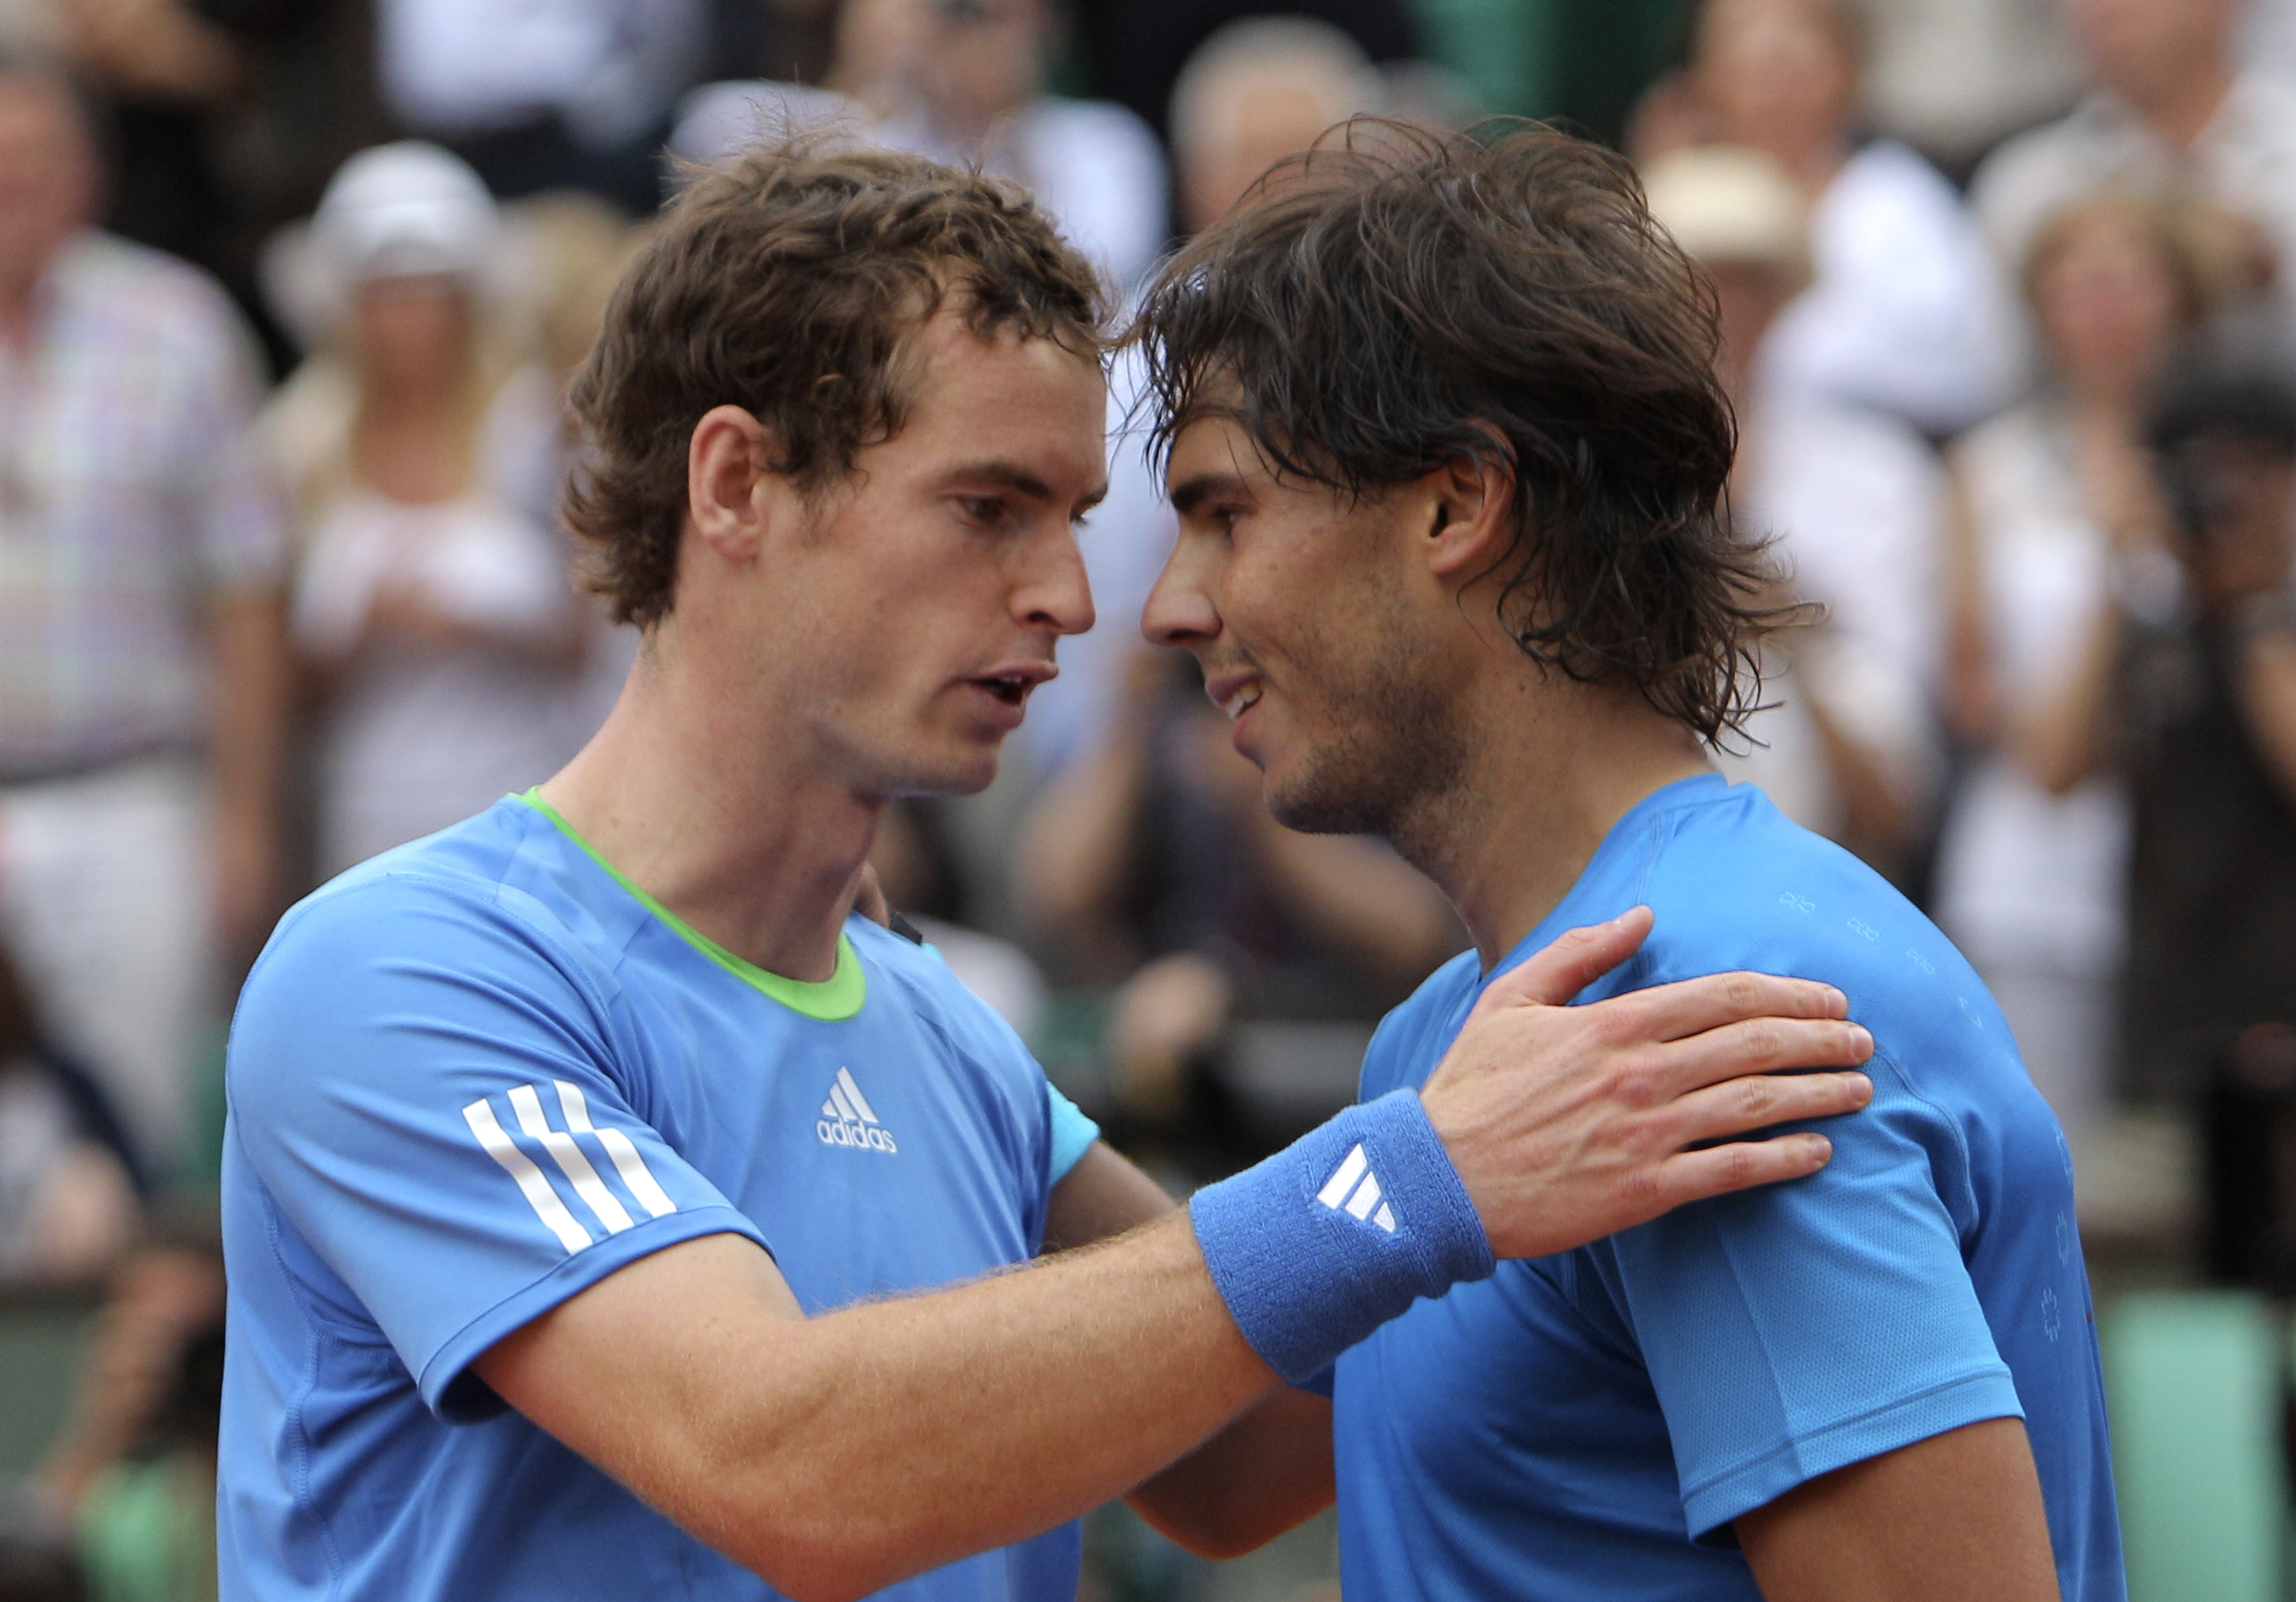 Tennis, Rafael Nadal, Andy Murray, Roger Federer, Novak Djokovic